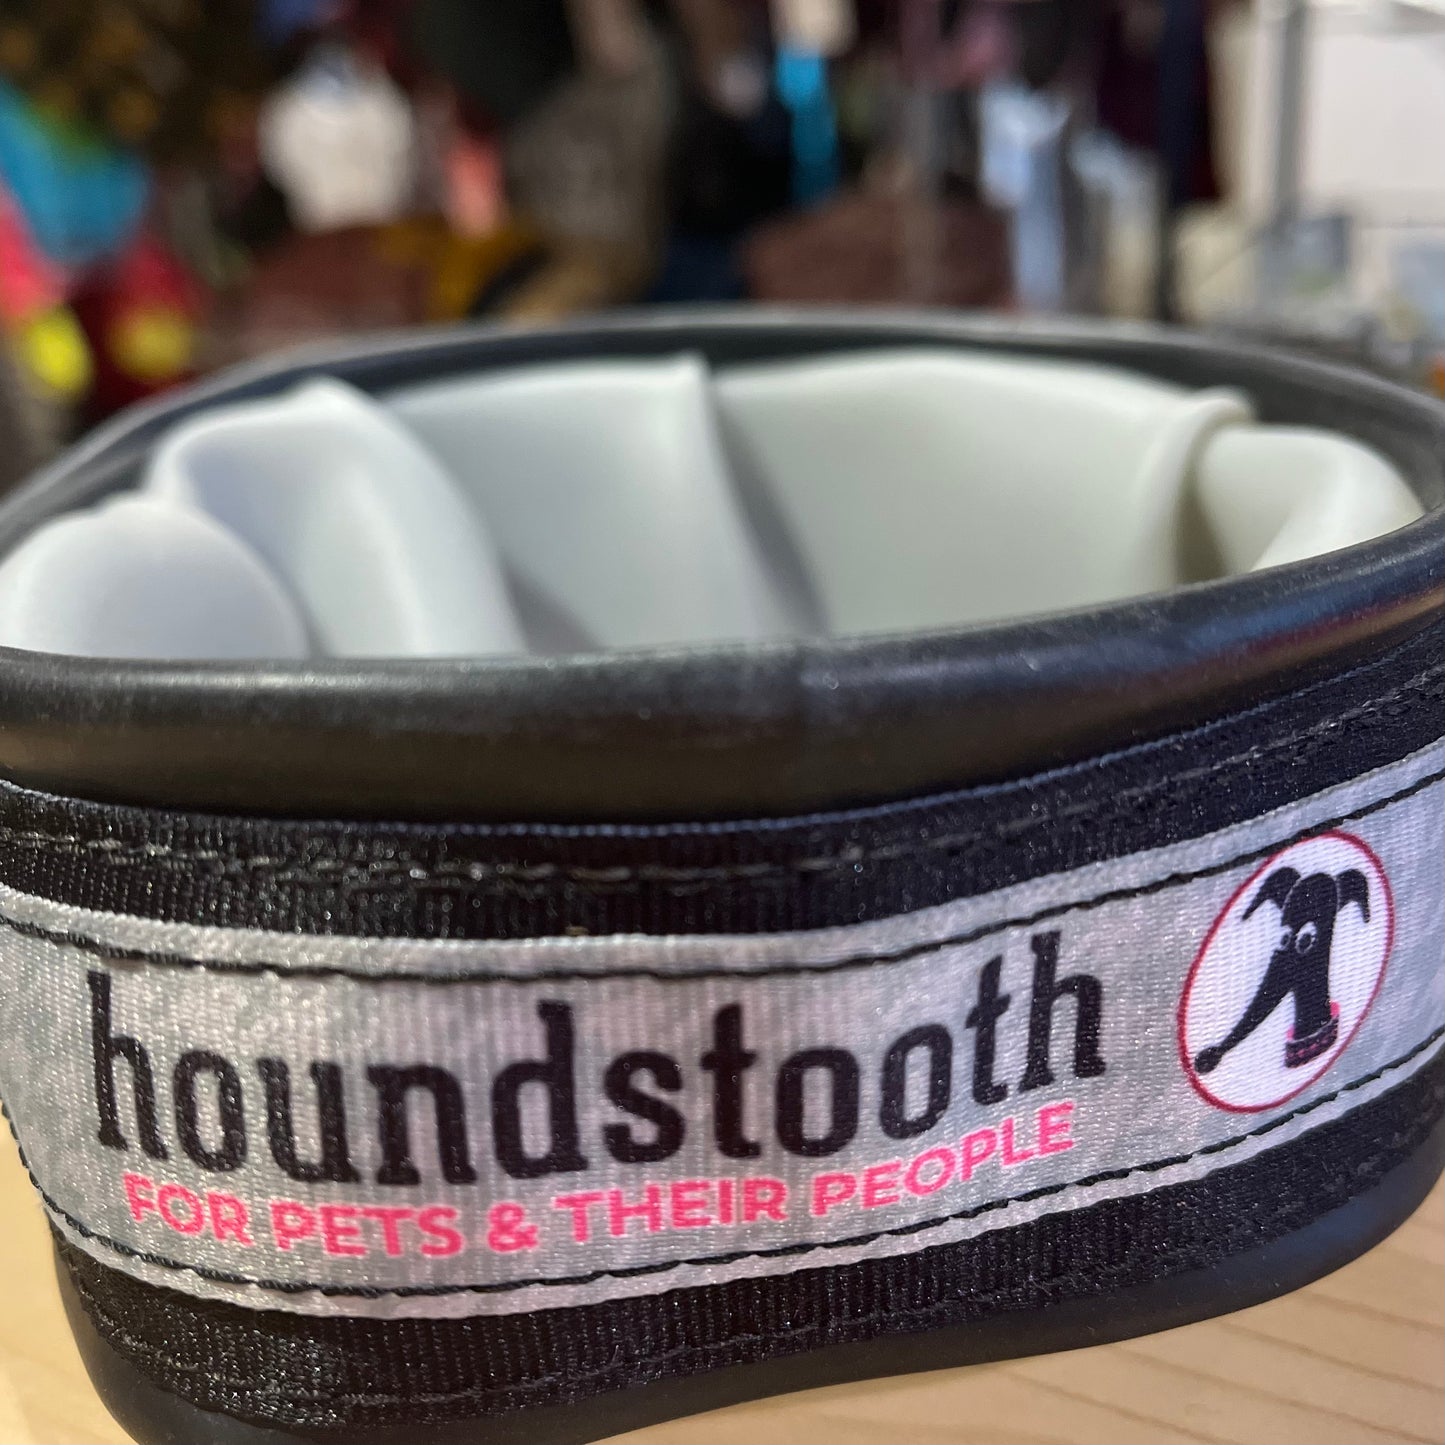 Houndstooth Buddy Bowl